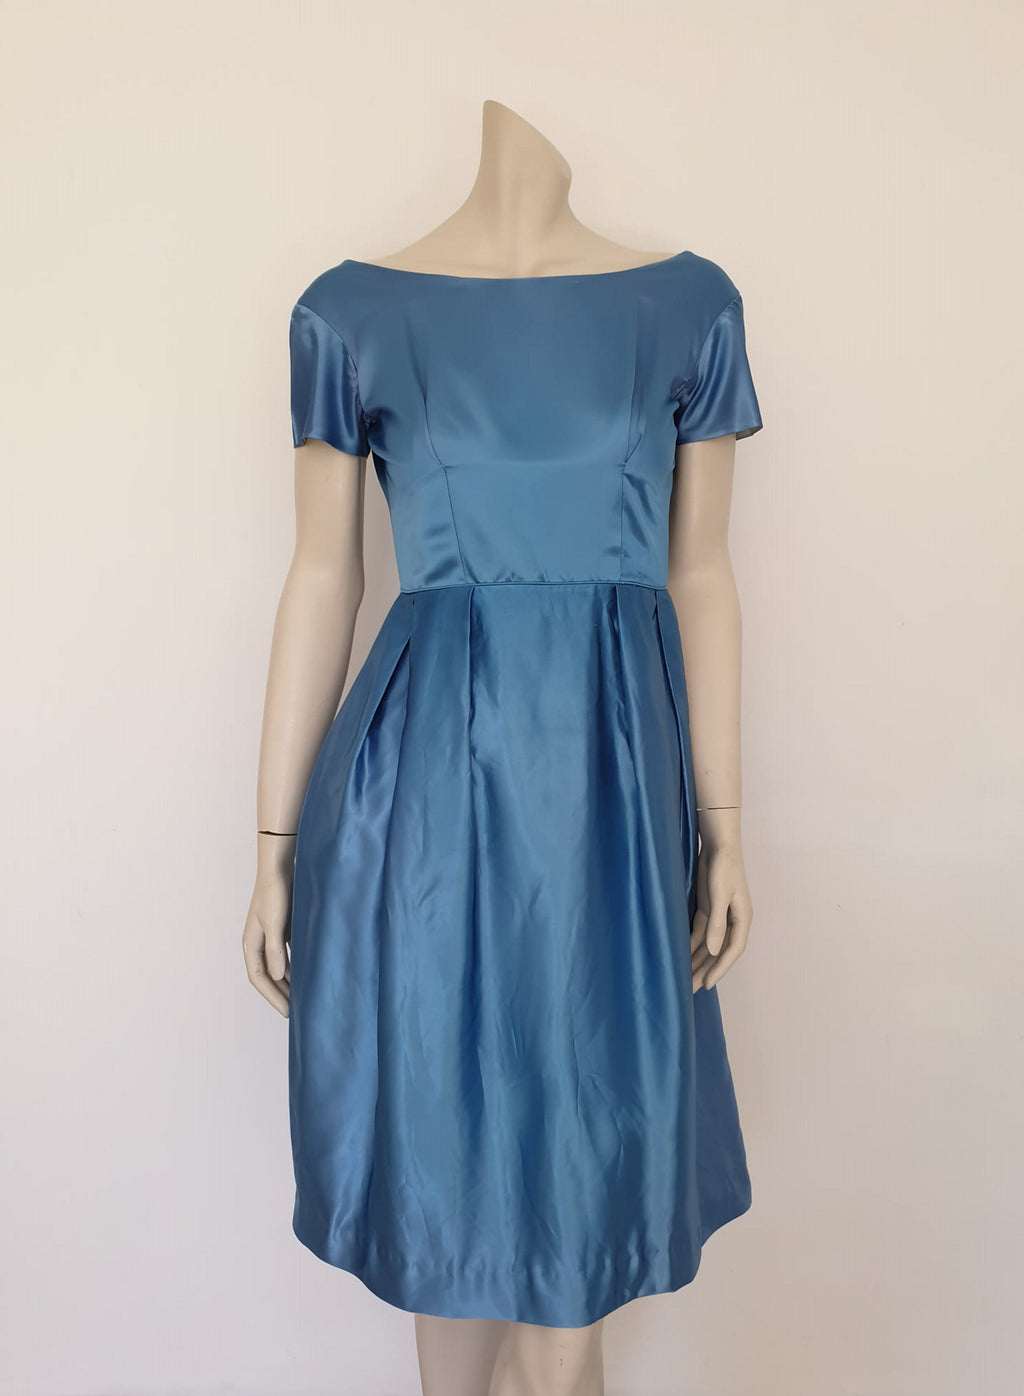 1960s vintage blue satin dress with rose at the back